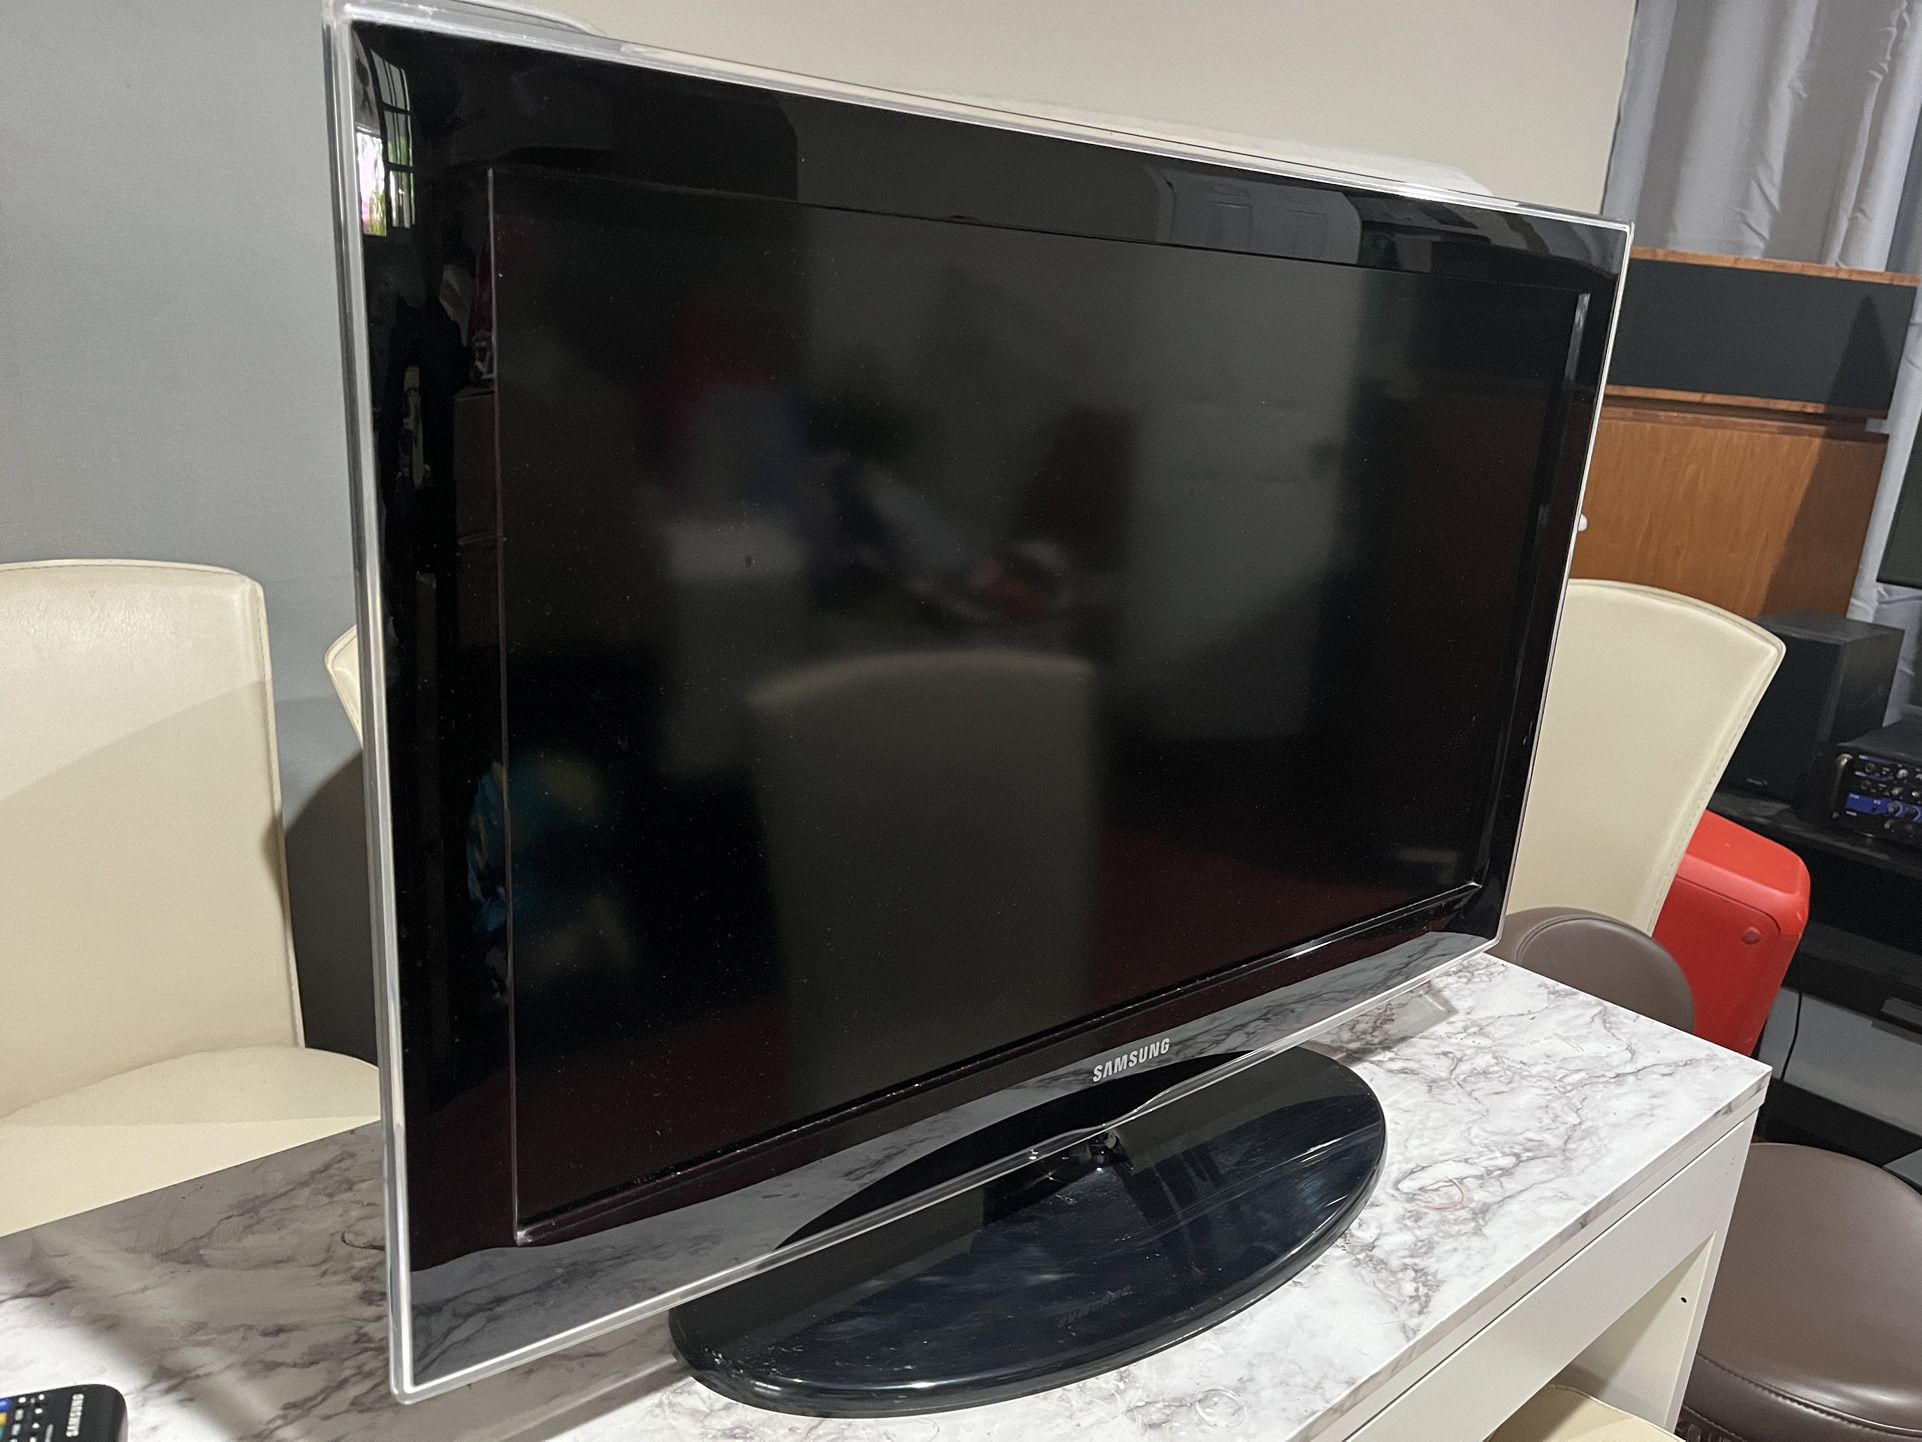 Samsung LCD TV 32” LN32D450